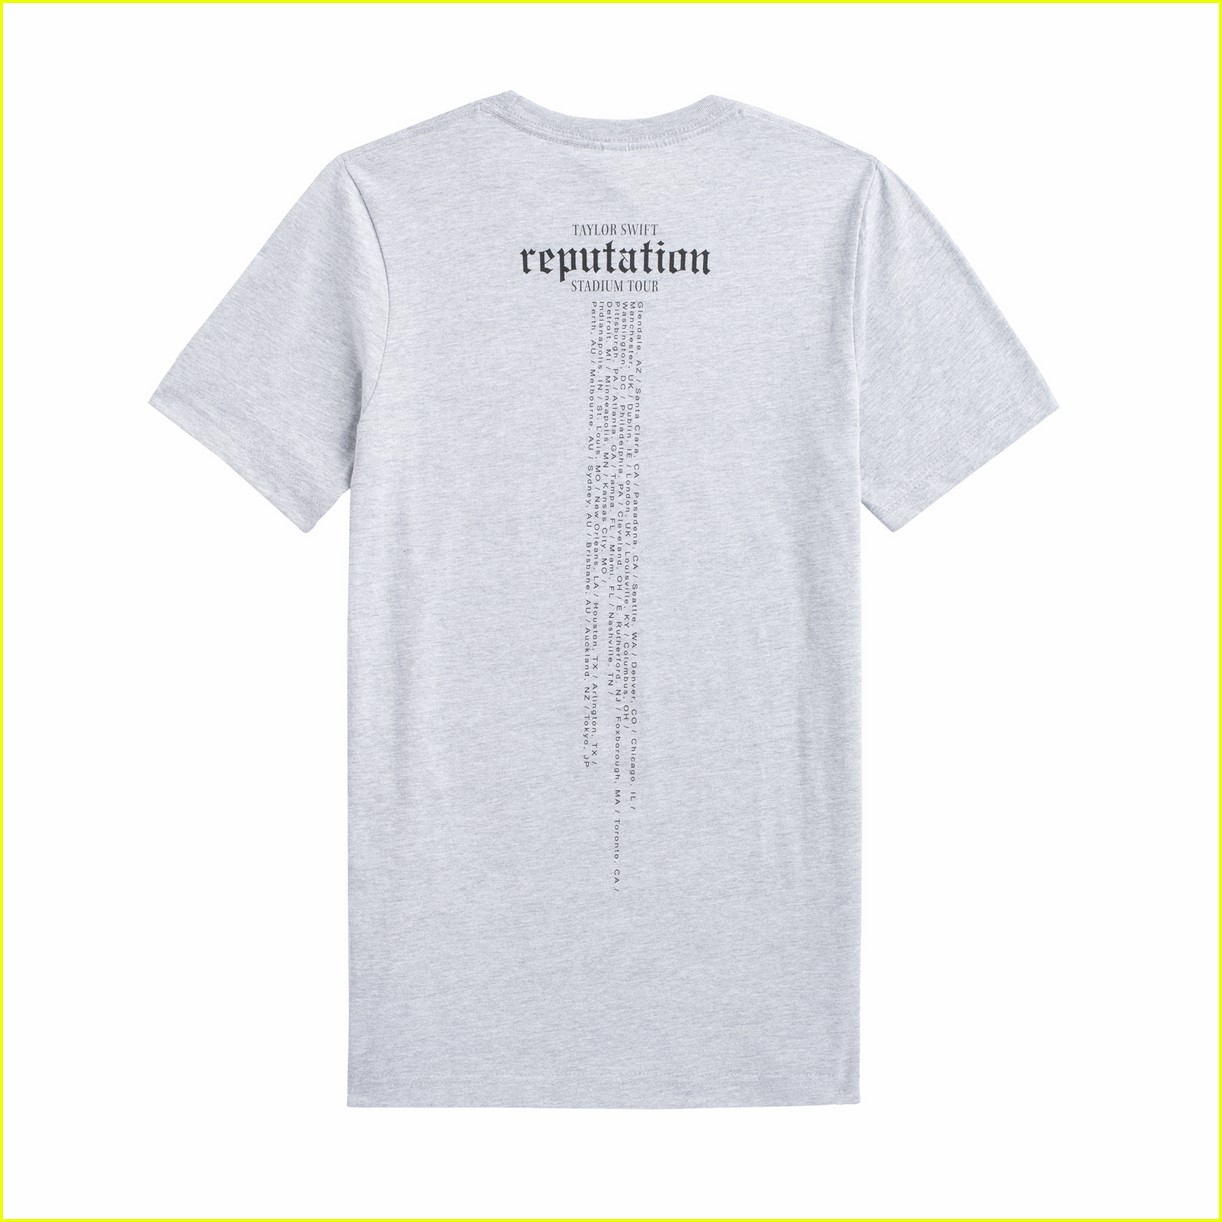 Taylor Swift Reputation Merchandise